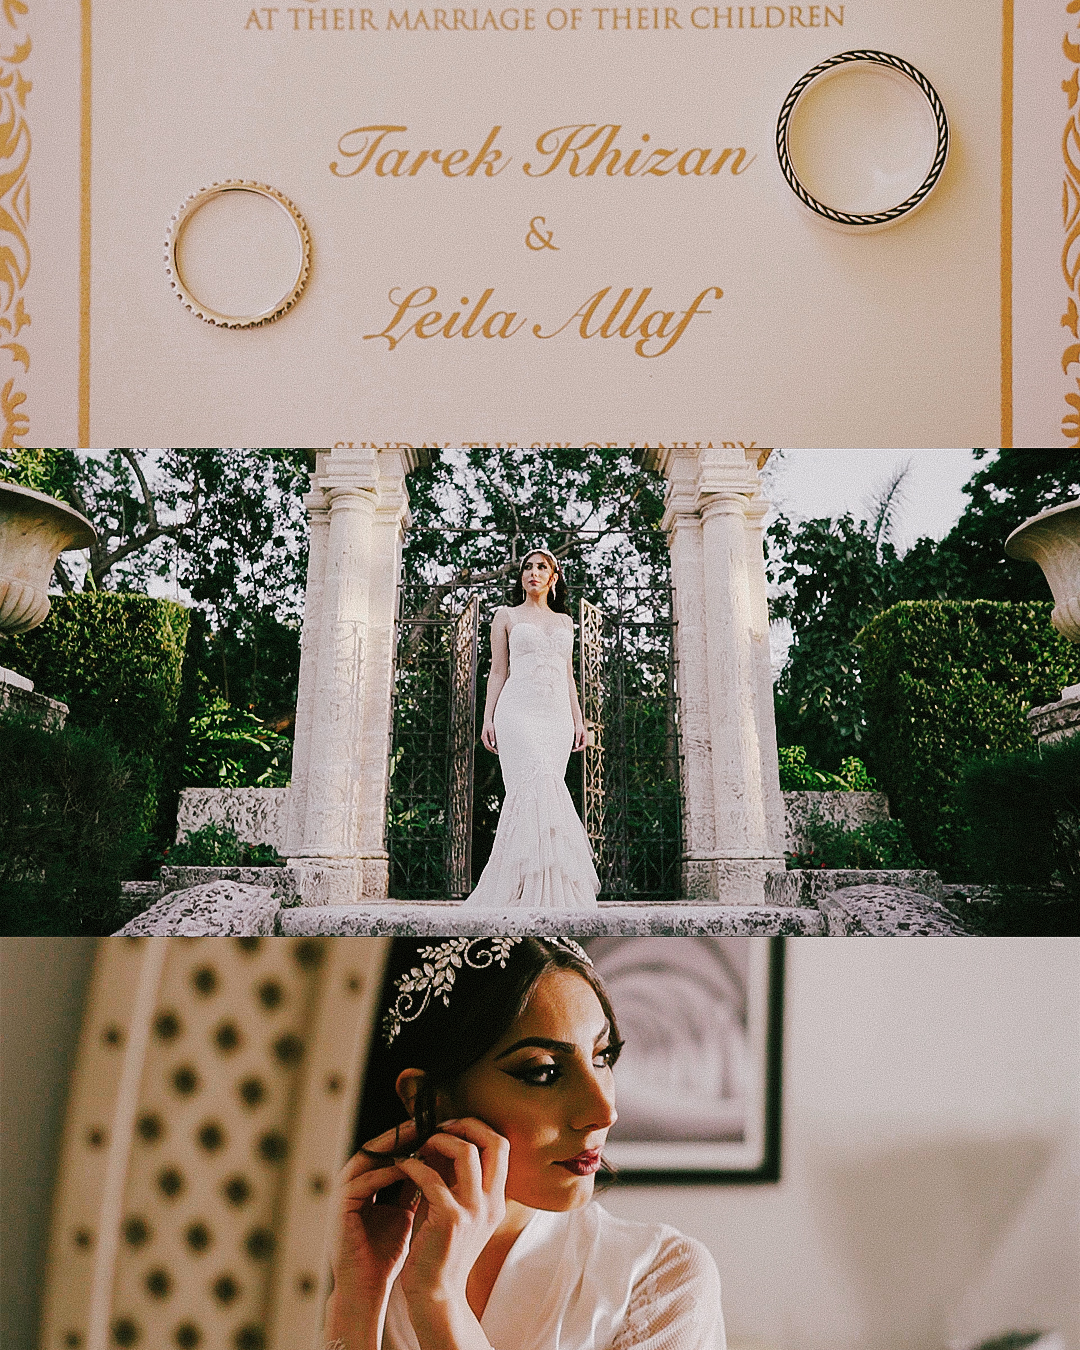 Leila and Tarek, wedding in Miami - image 1